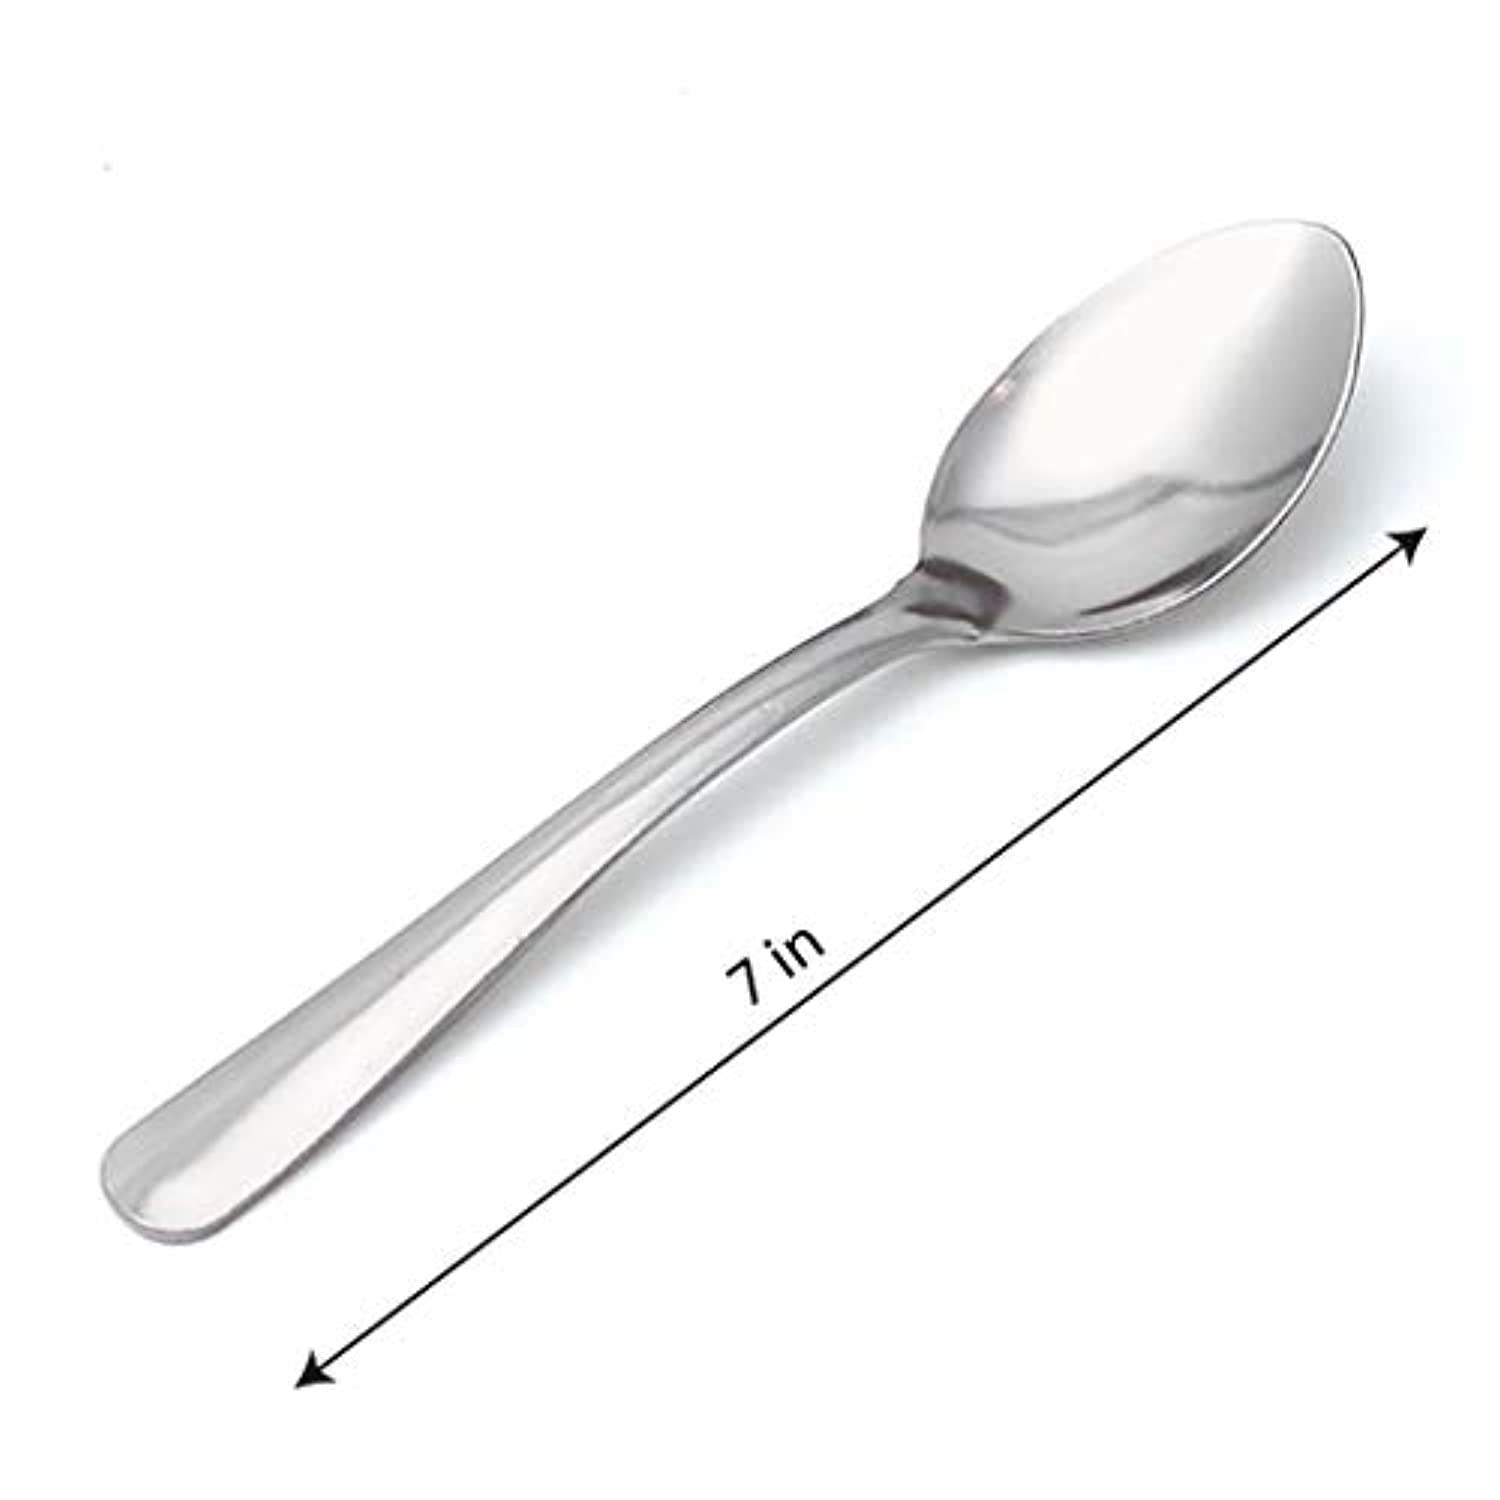 Gift Genius - Part 257 - Adjustable Measuring Spoon  Link